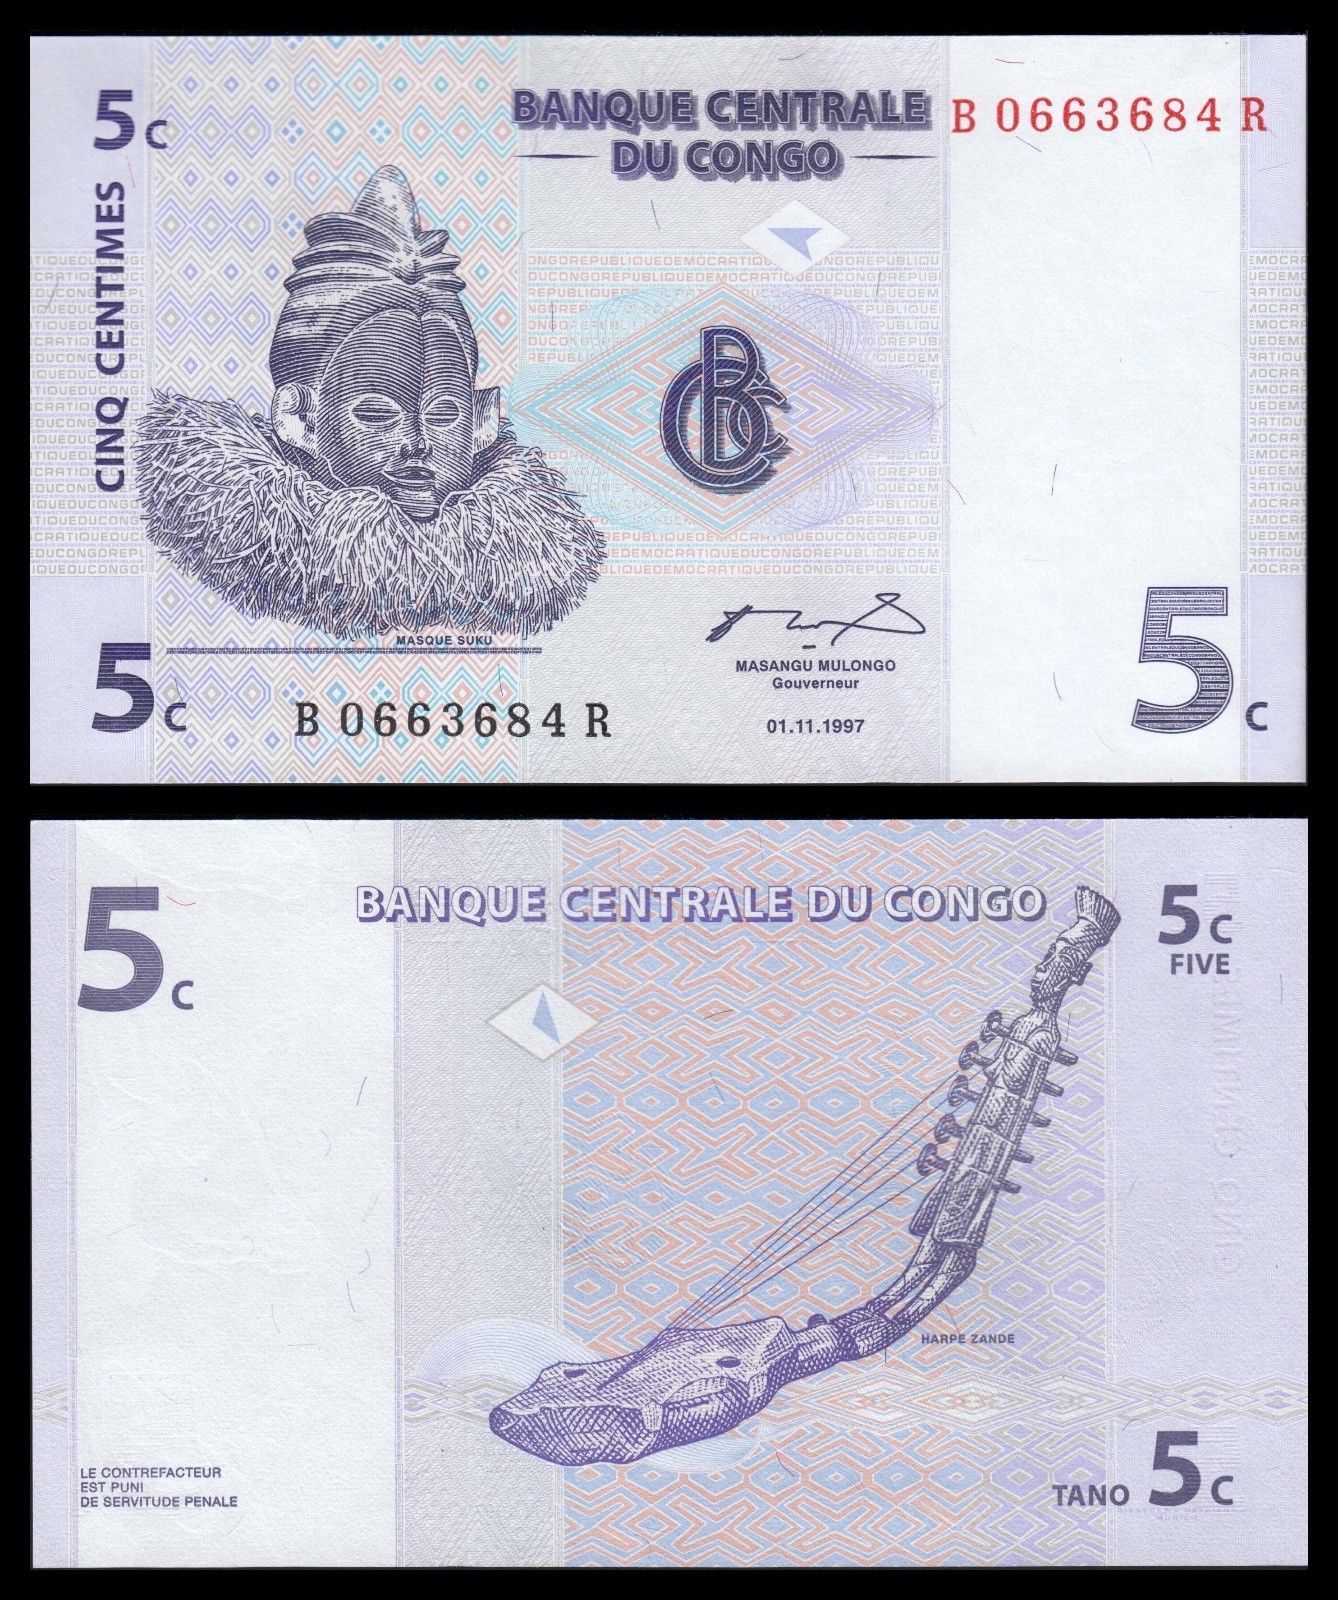 5 centimes Congo Democratic Republic 1997